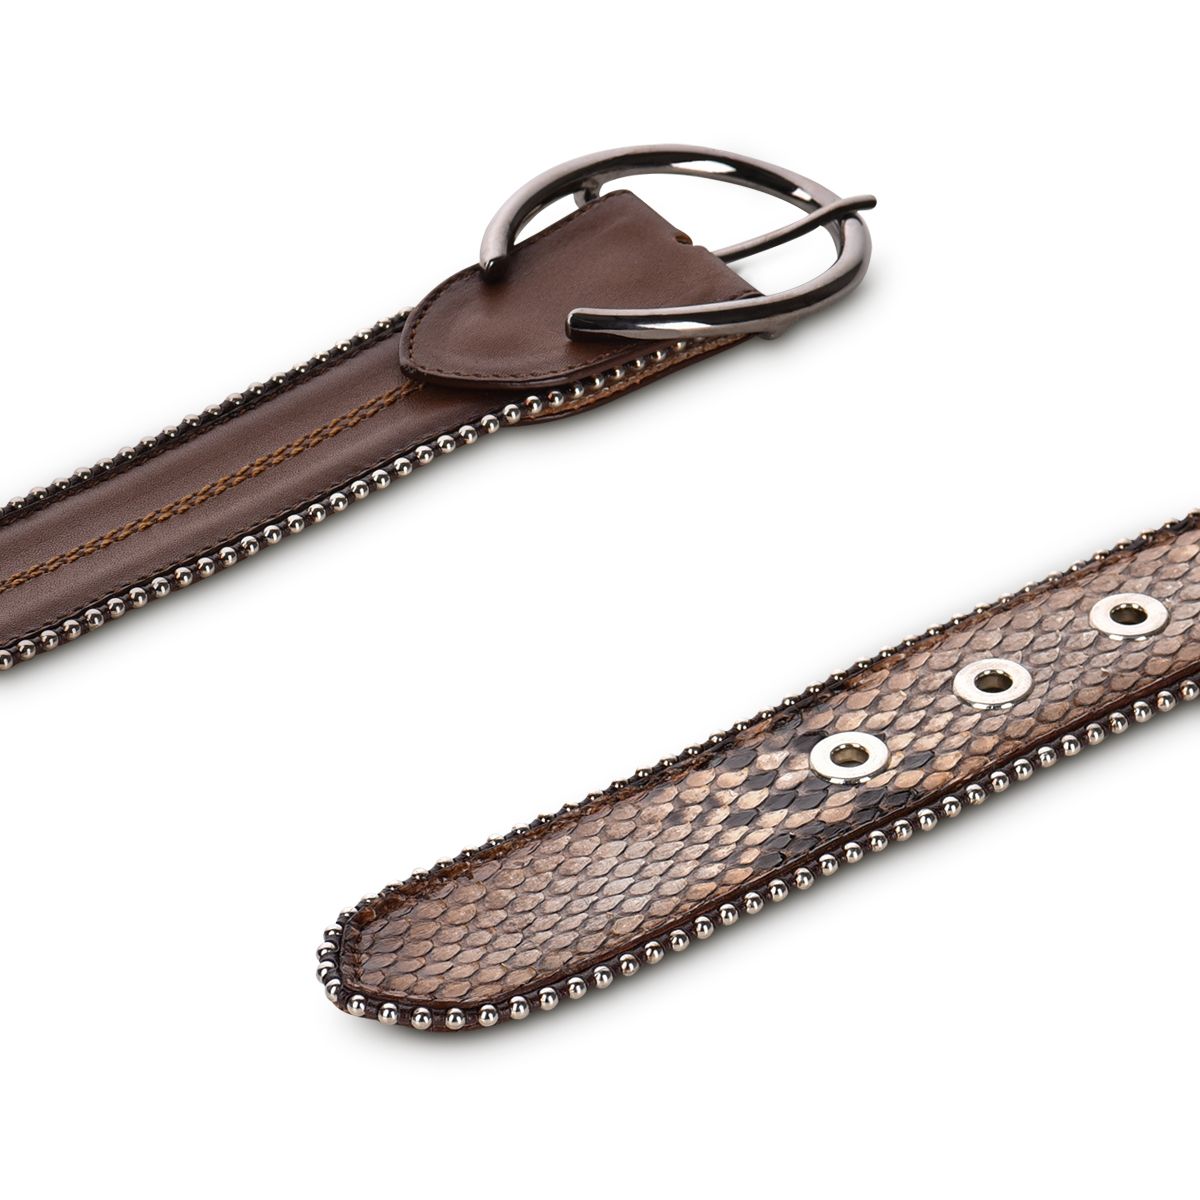 Engraved oxford leather belt - CDA999RS - Cuadra Shop